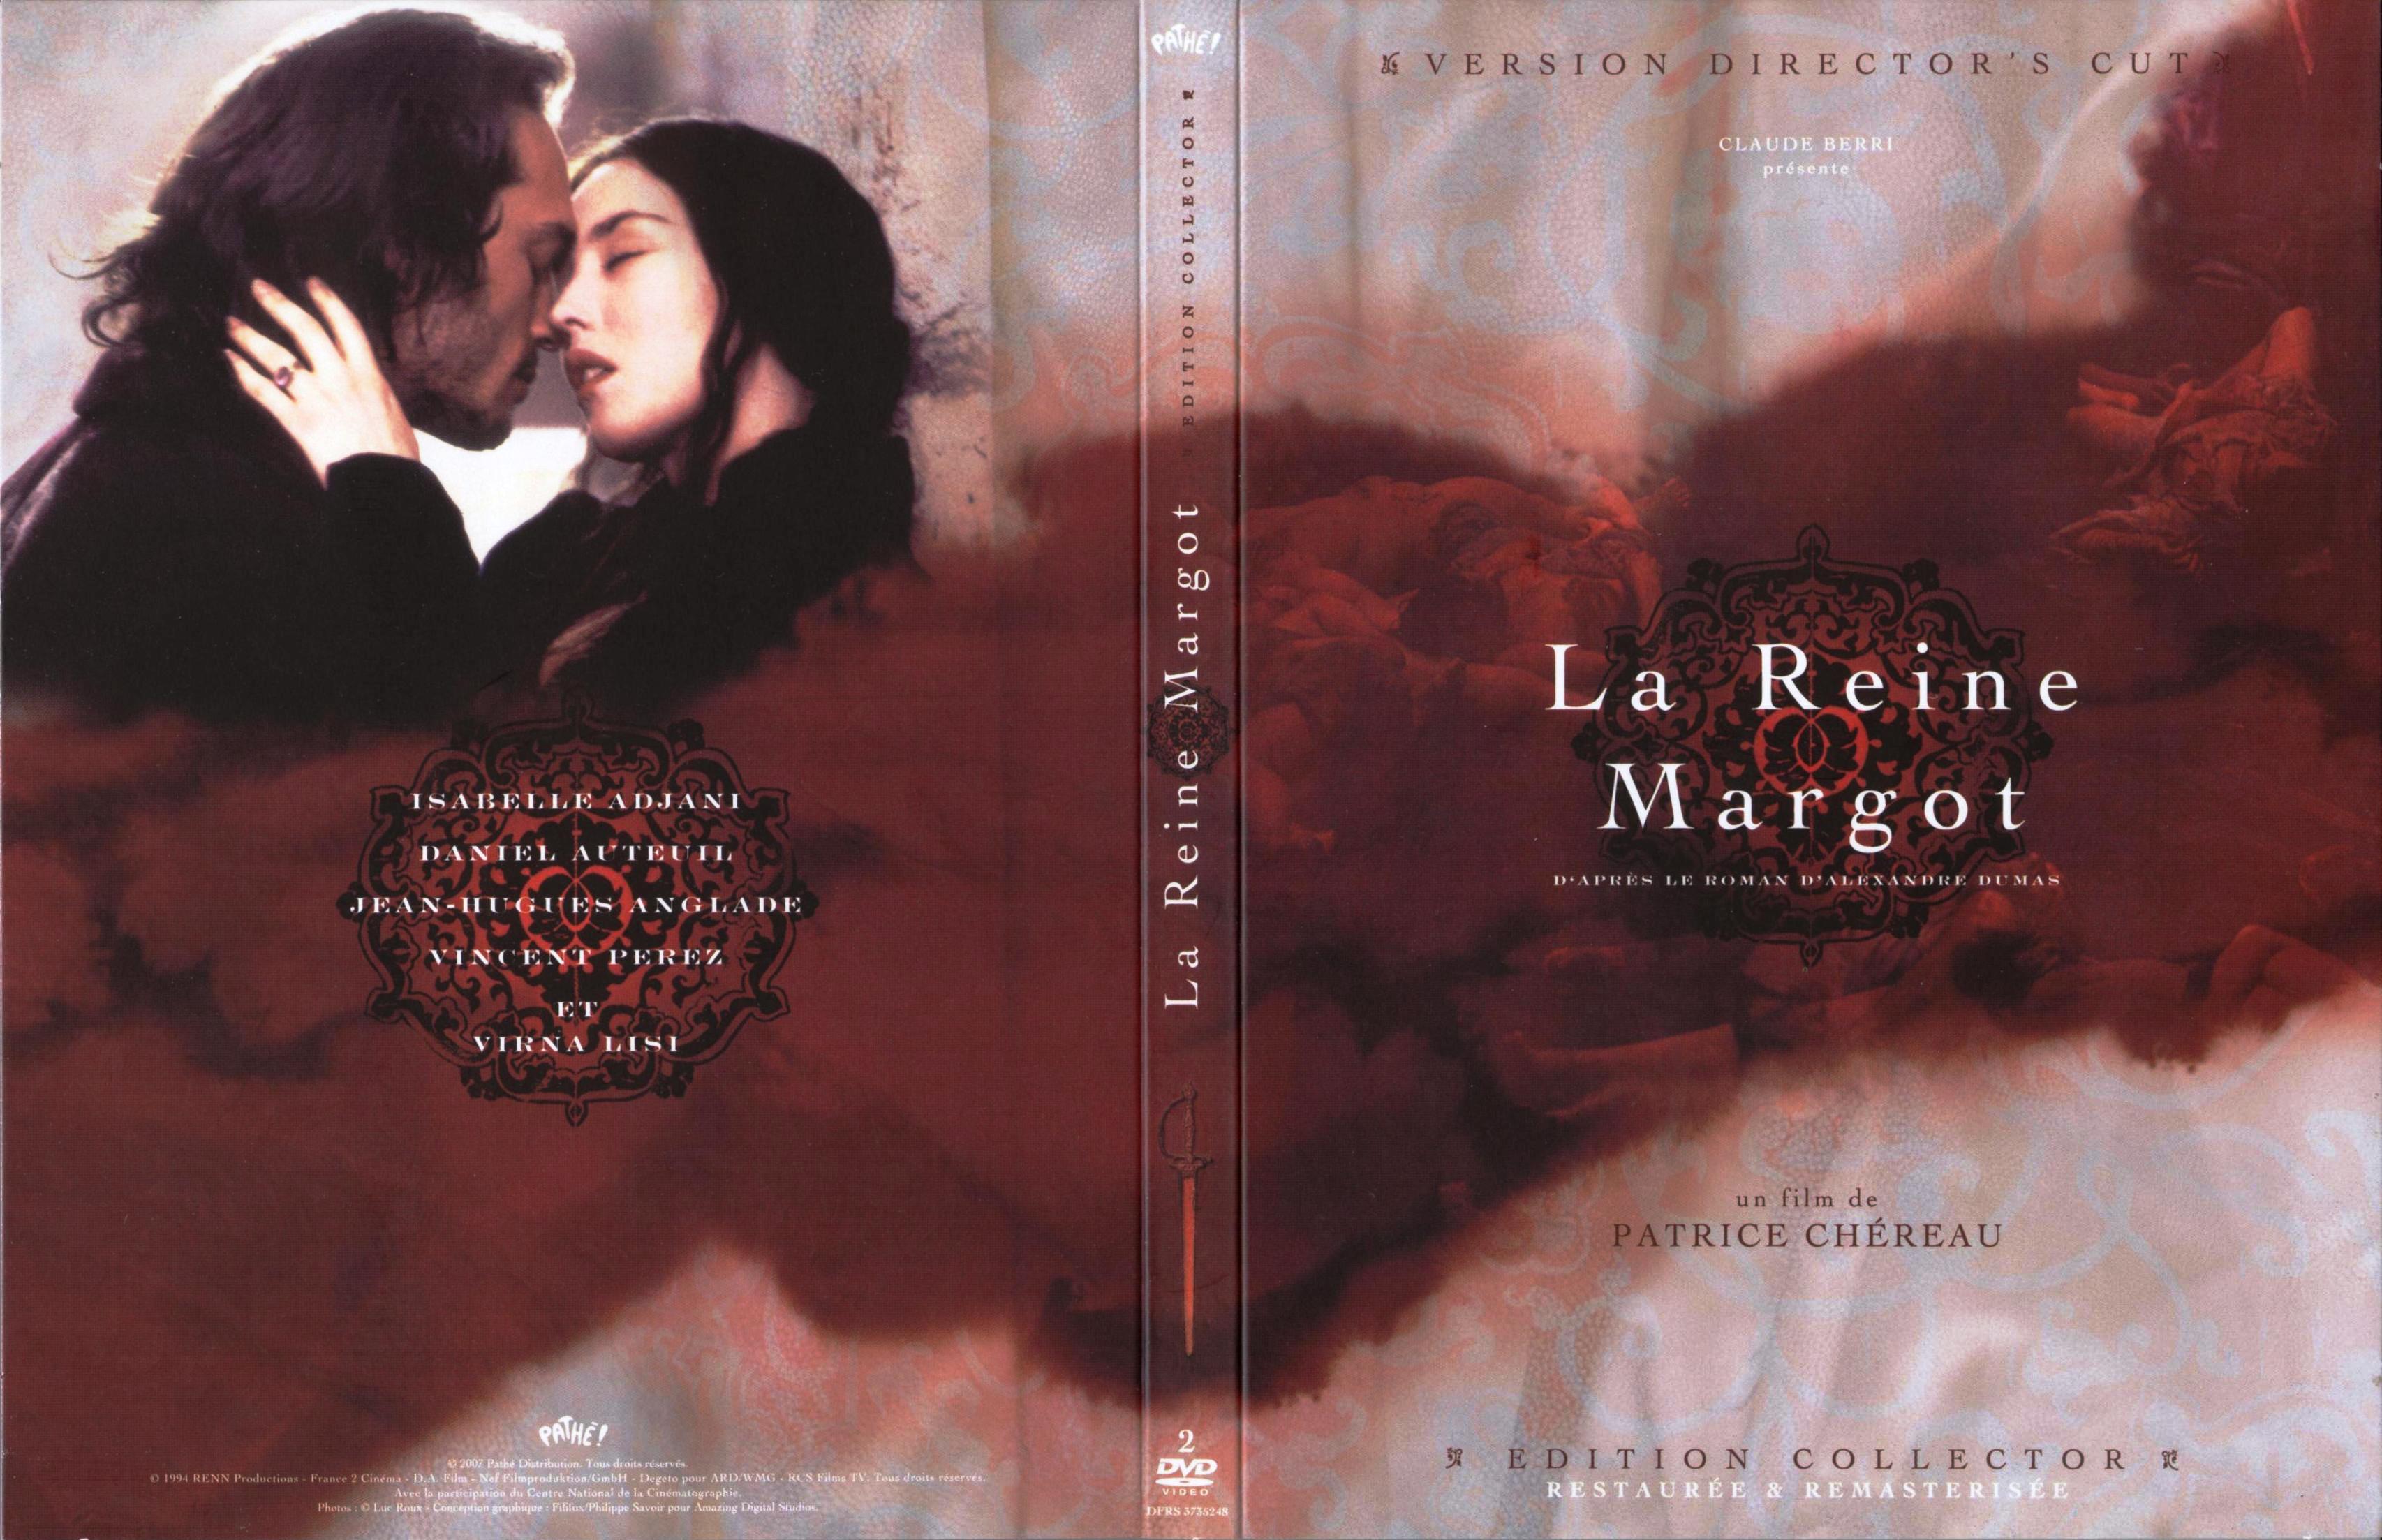 Jaquette DVD La reine margot v2